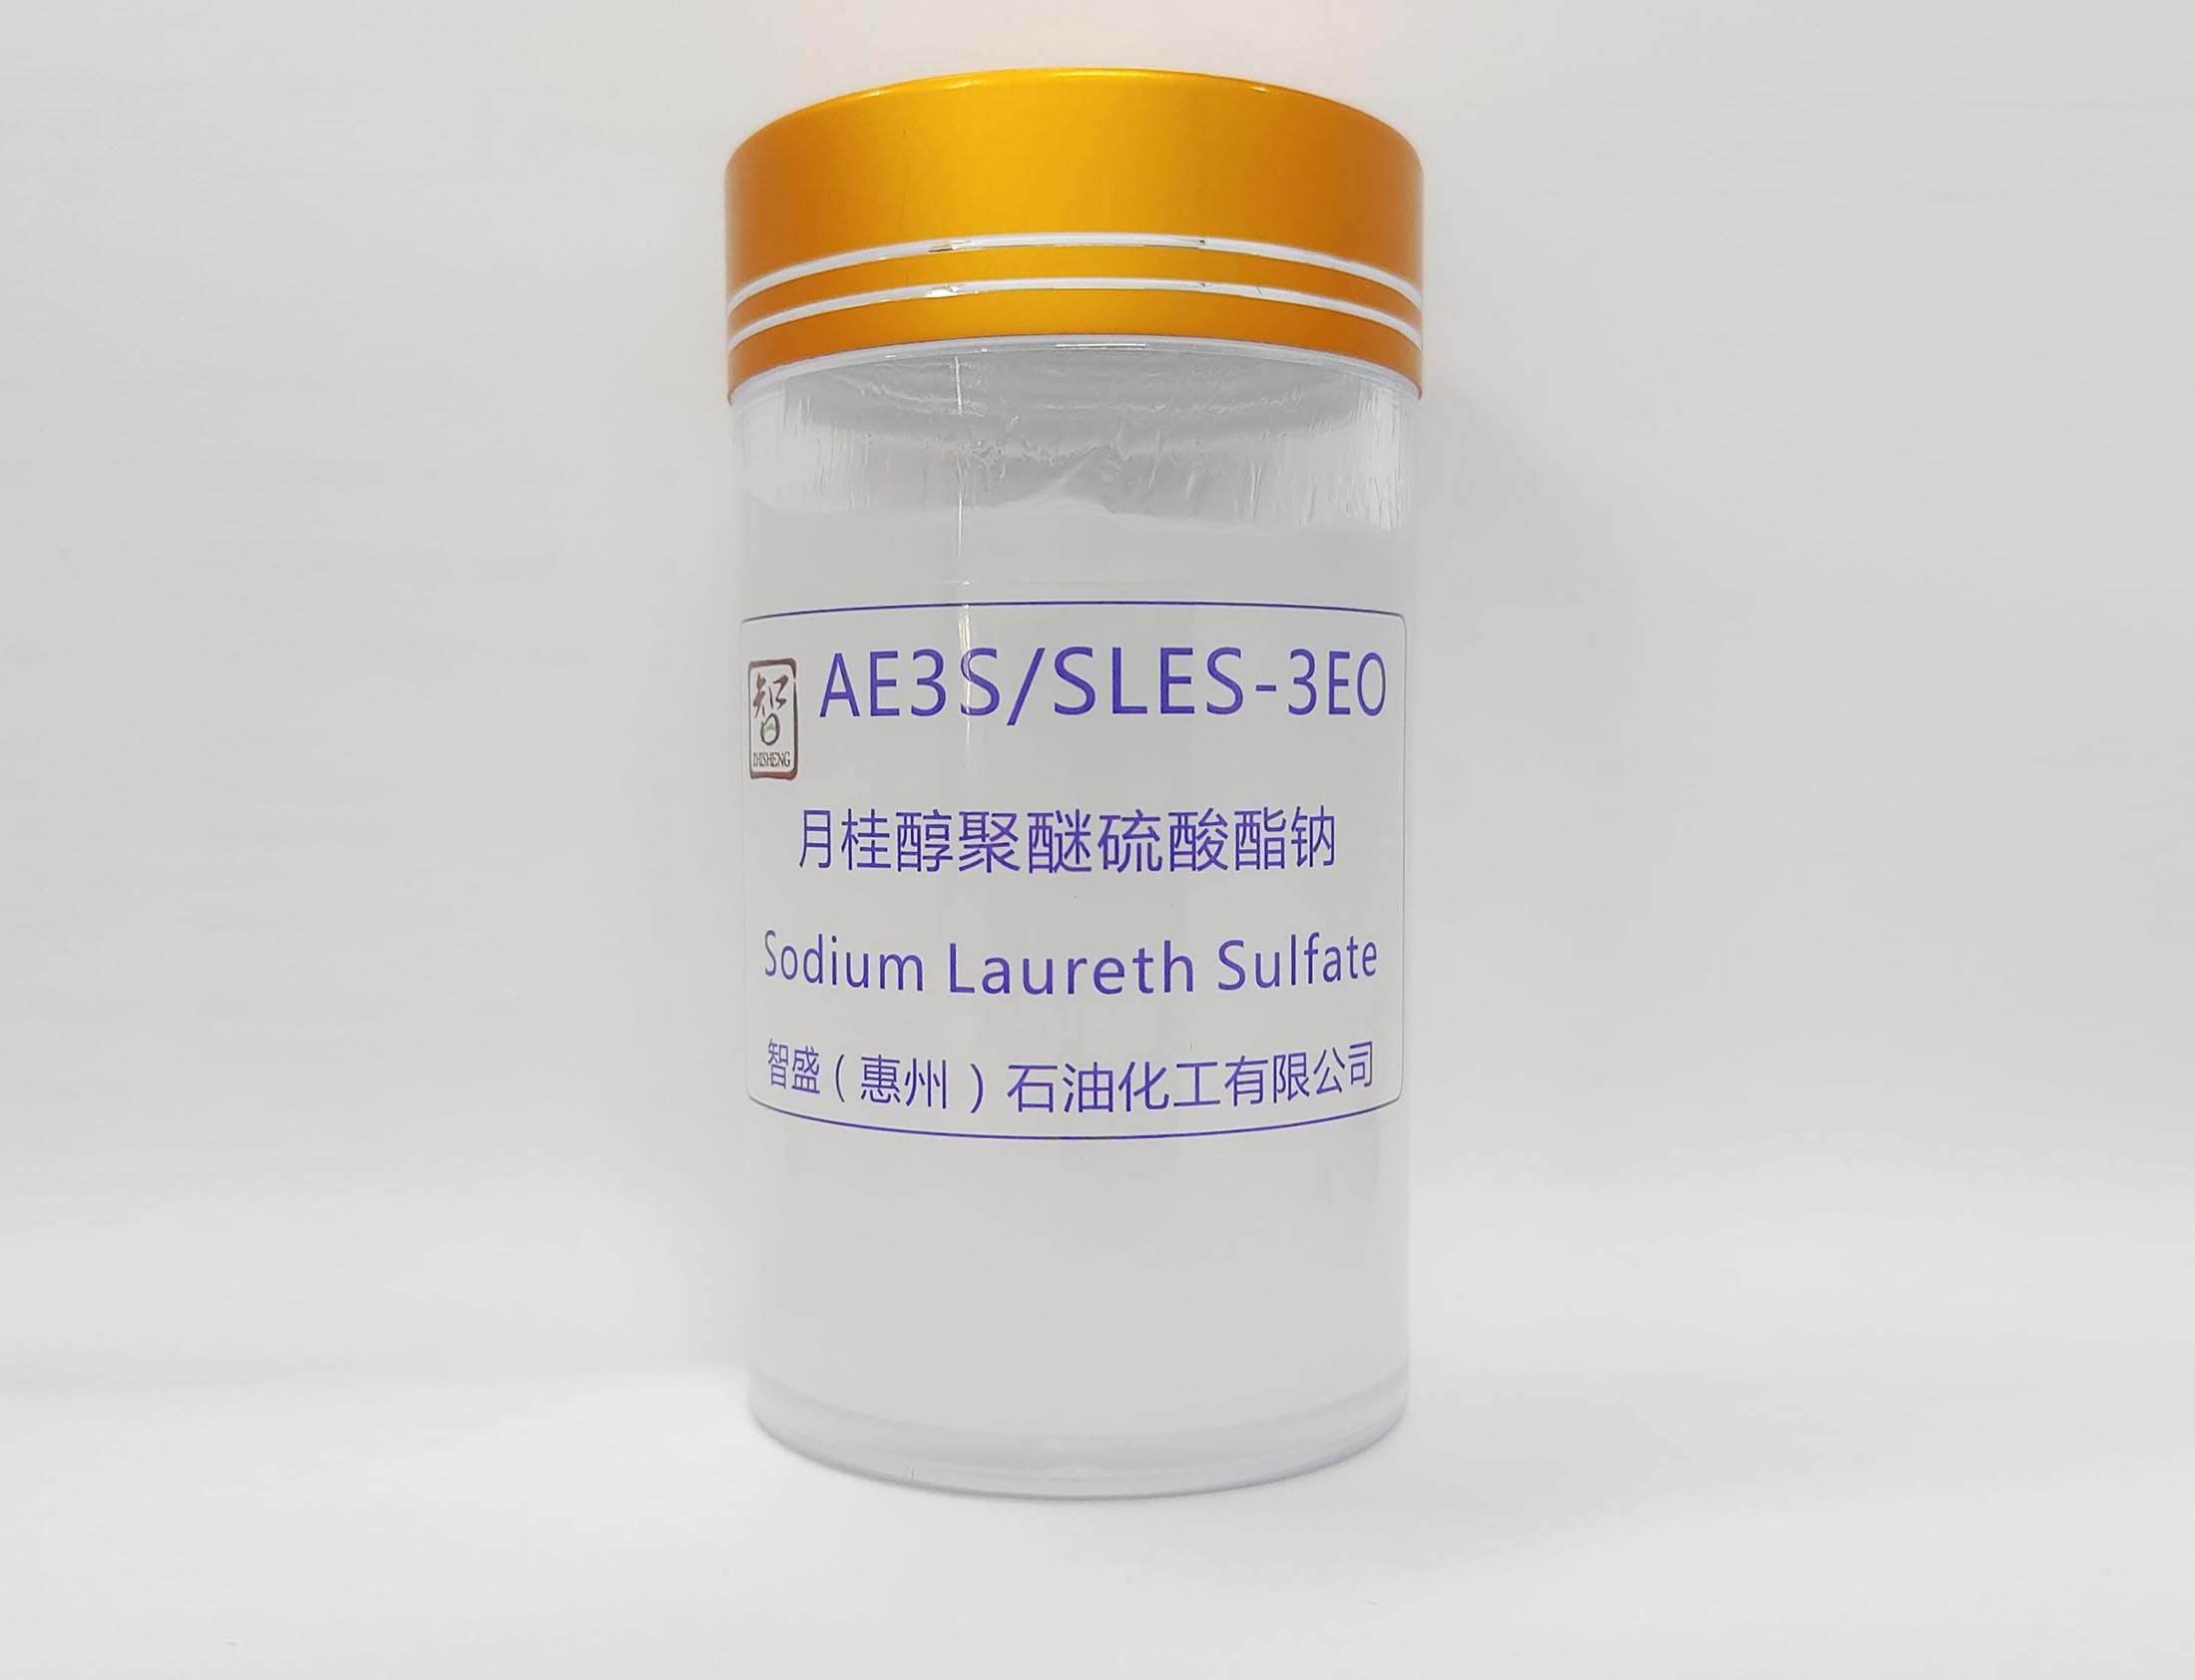 月桂醇聚醚硫酸酯钠(AE3S/SLES-3EO)